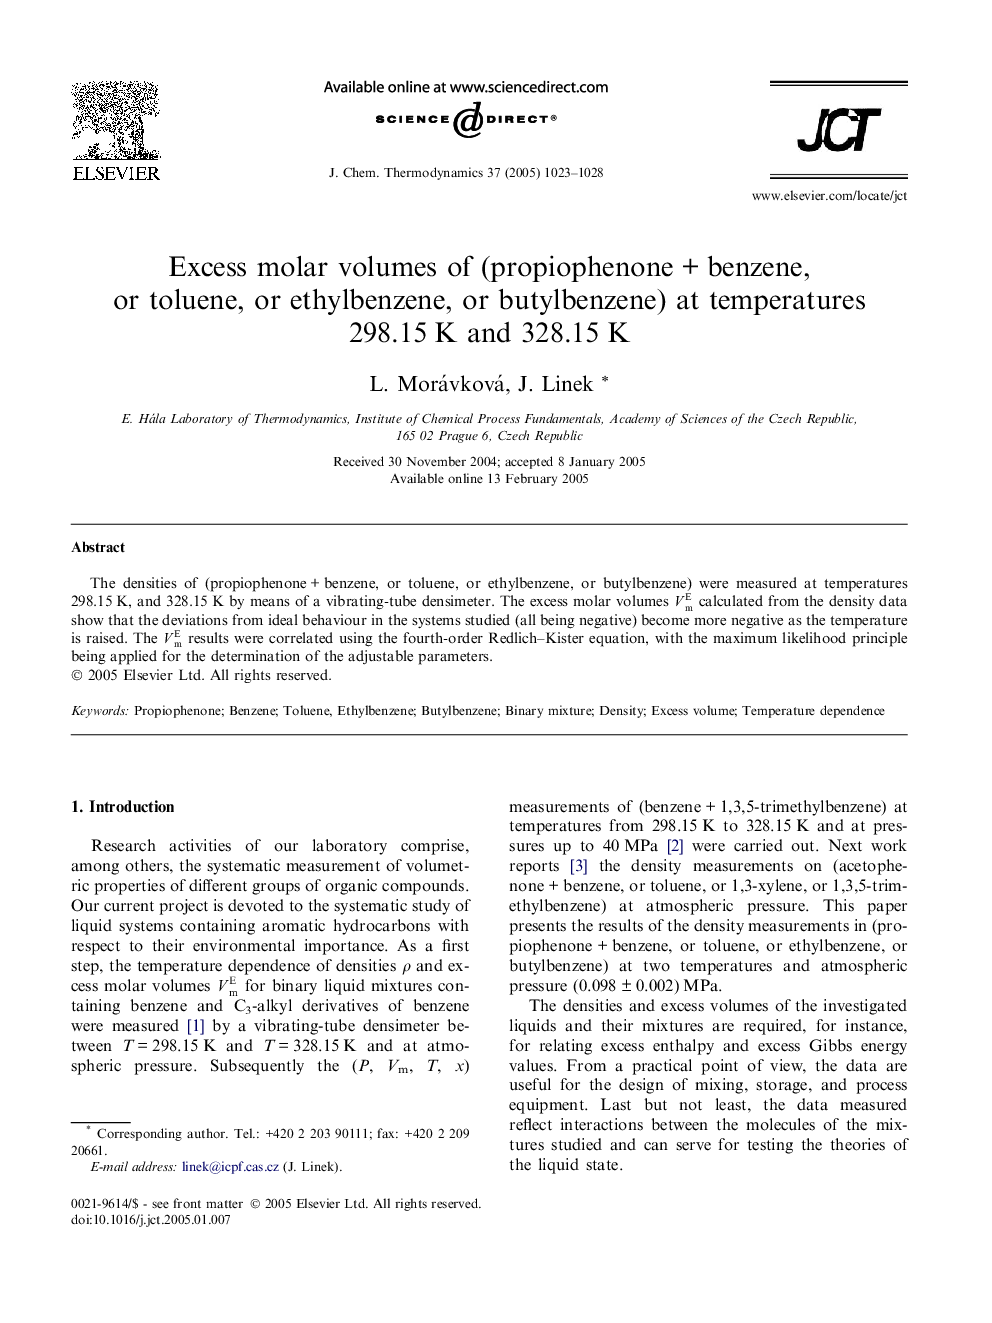 Excess molar volumes of (propiophenoneÂ +Â benzene, or toluene, or ethylbenzene, or butylbenzene) at temperatures 298.15Â K and 328.15Â K